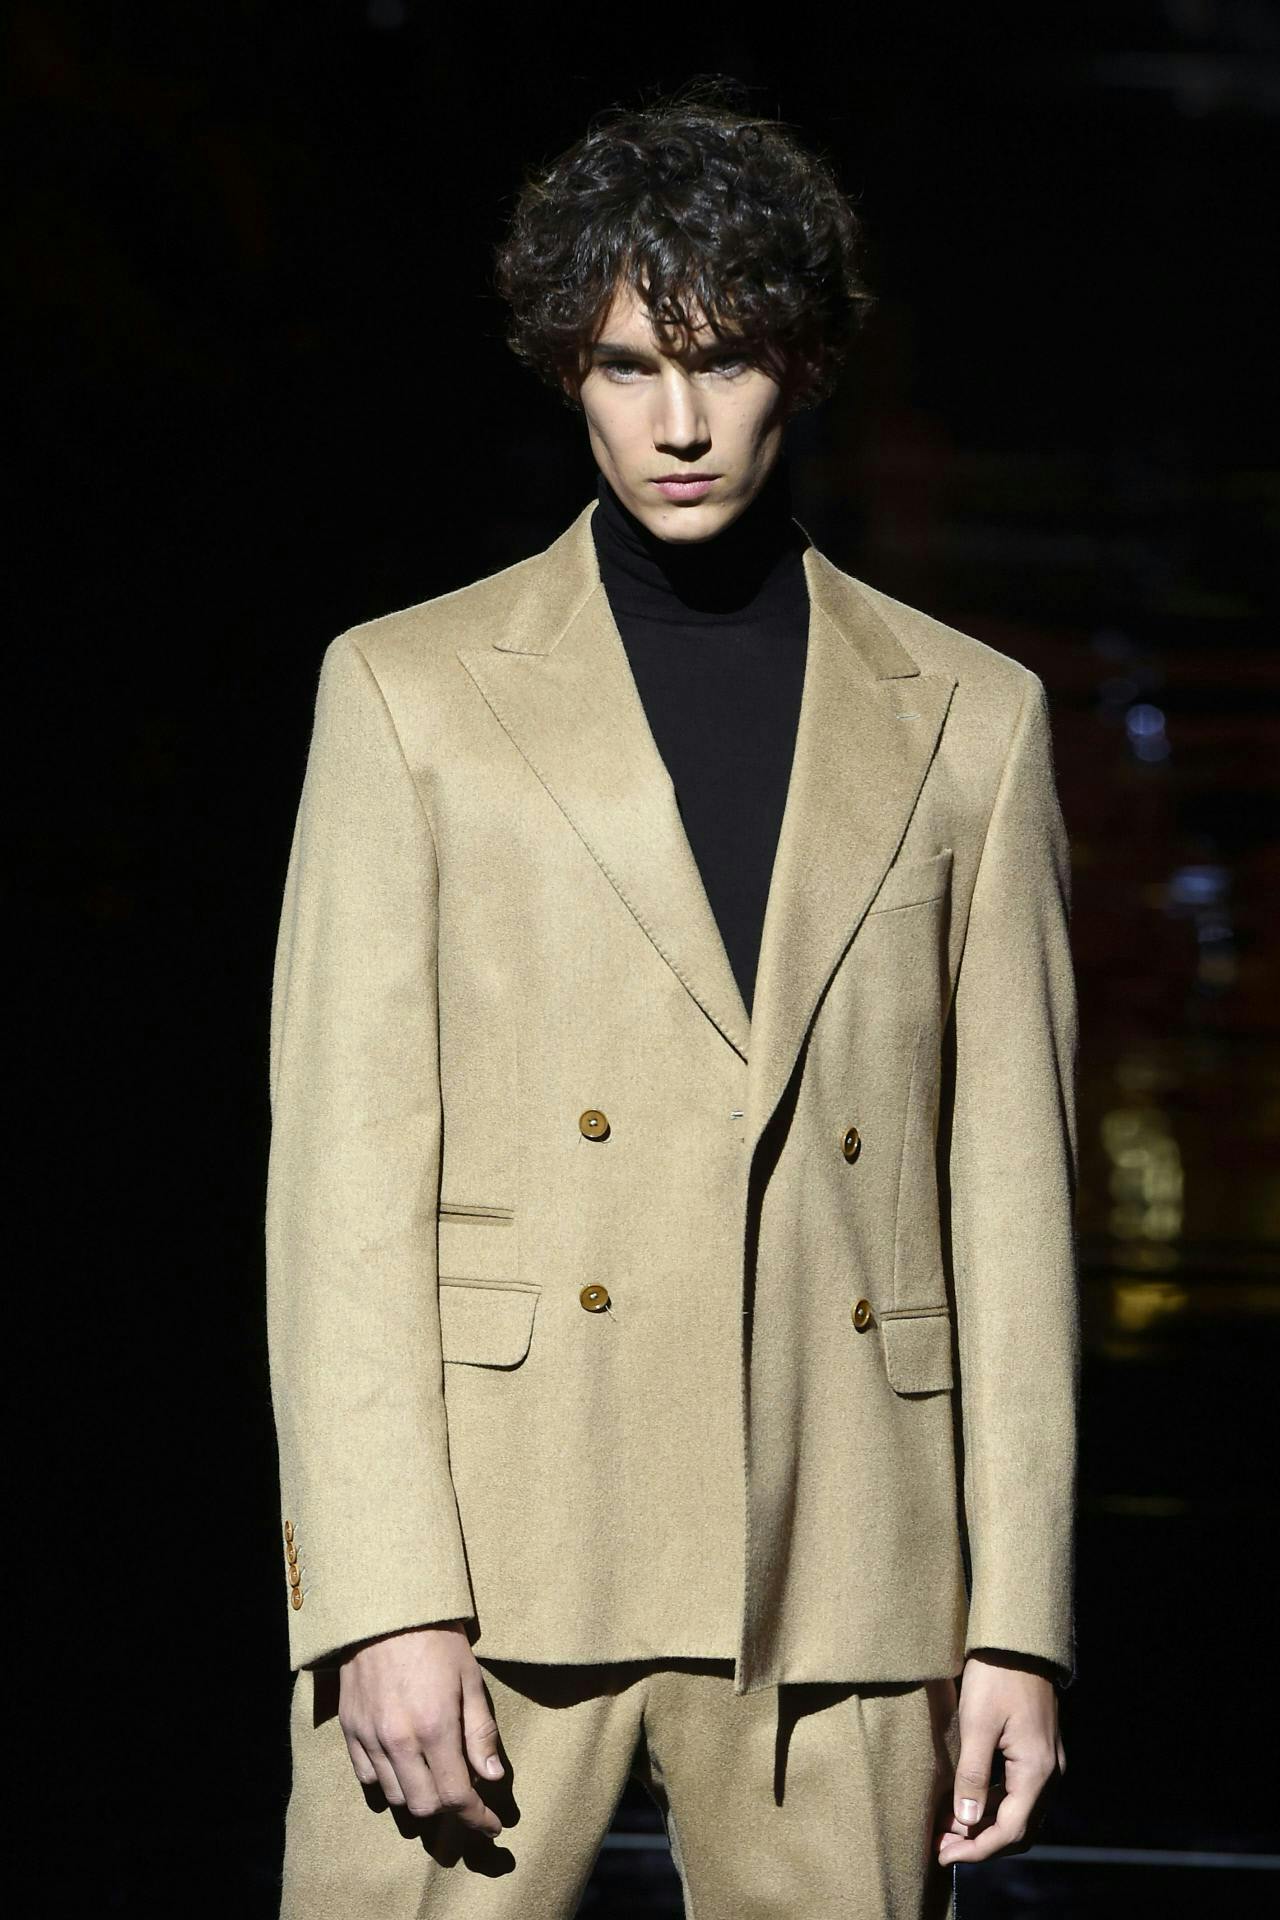 madrid clothing apparel overcoat coat suit person human tuxedo